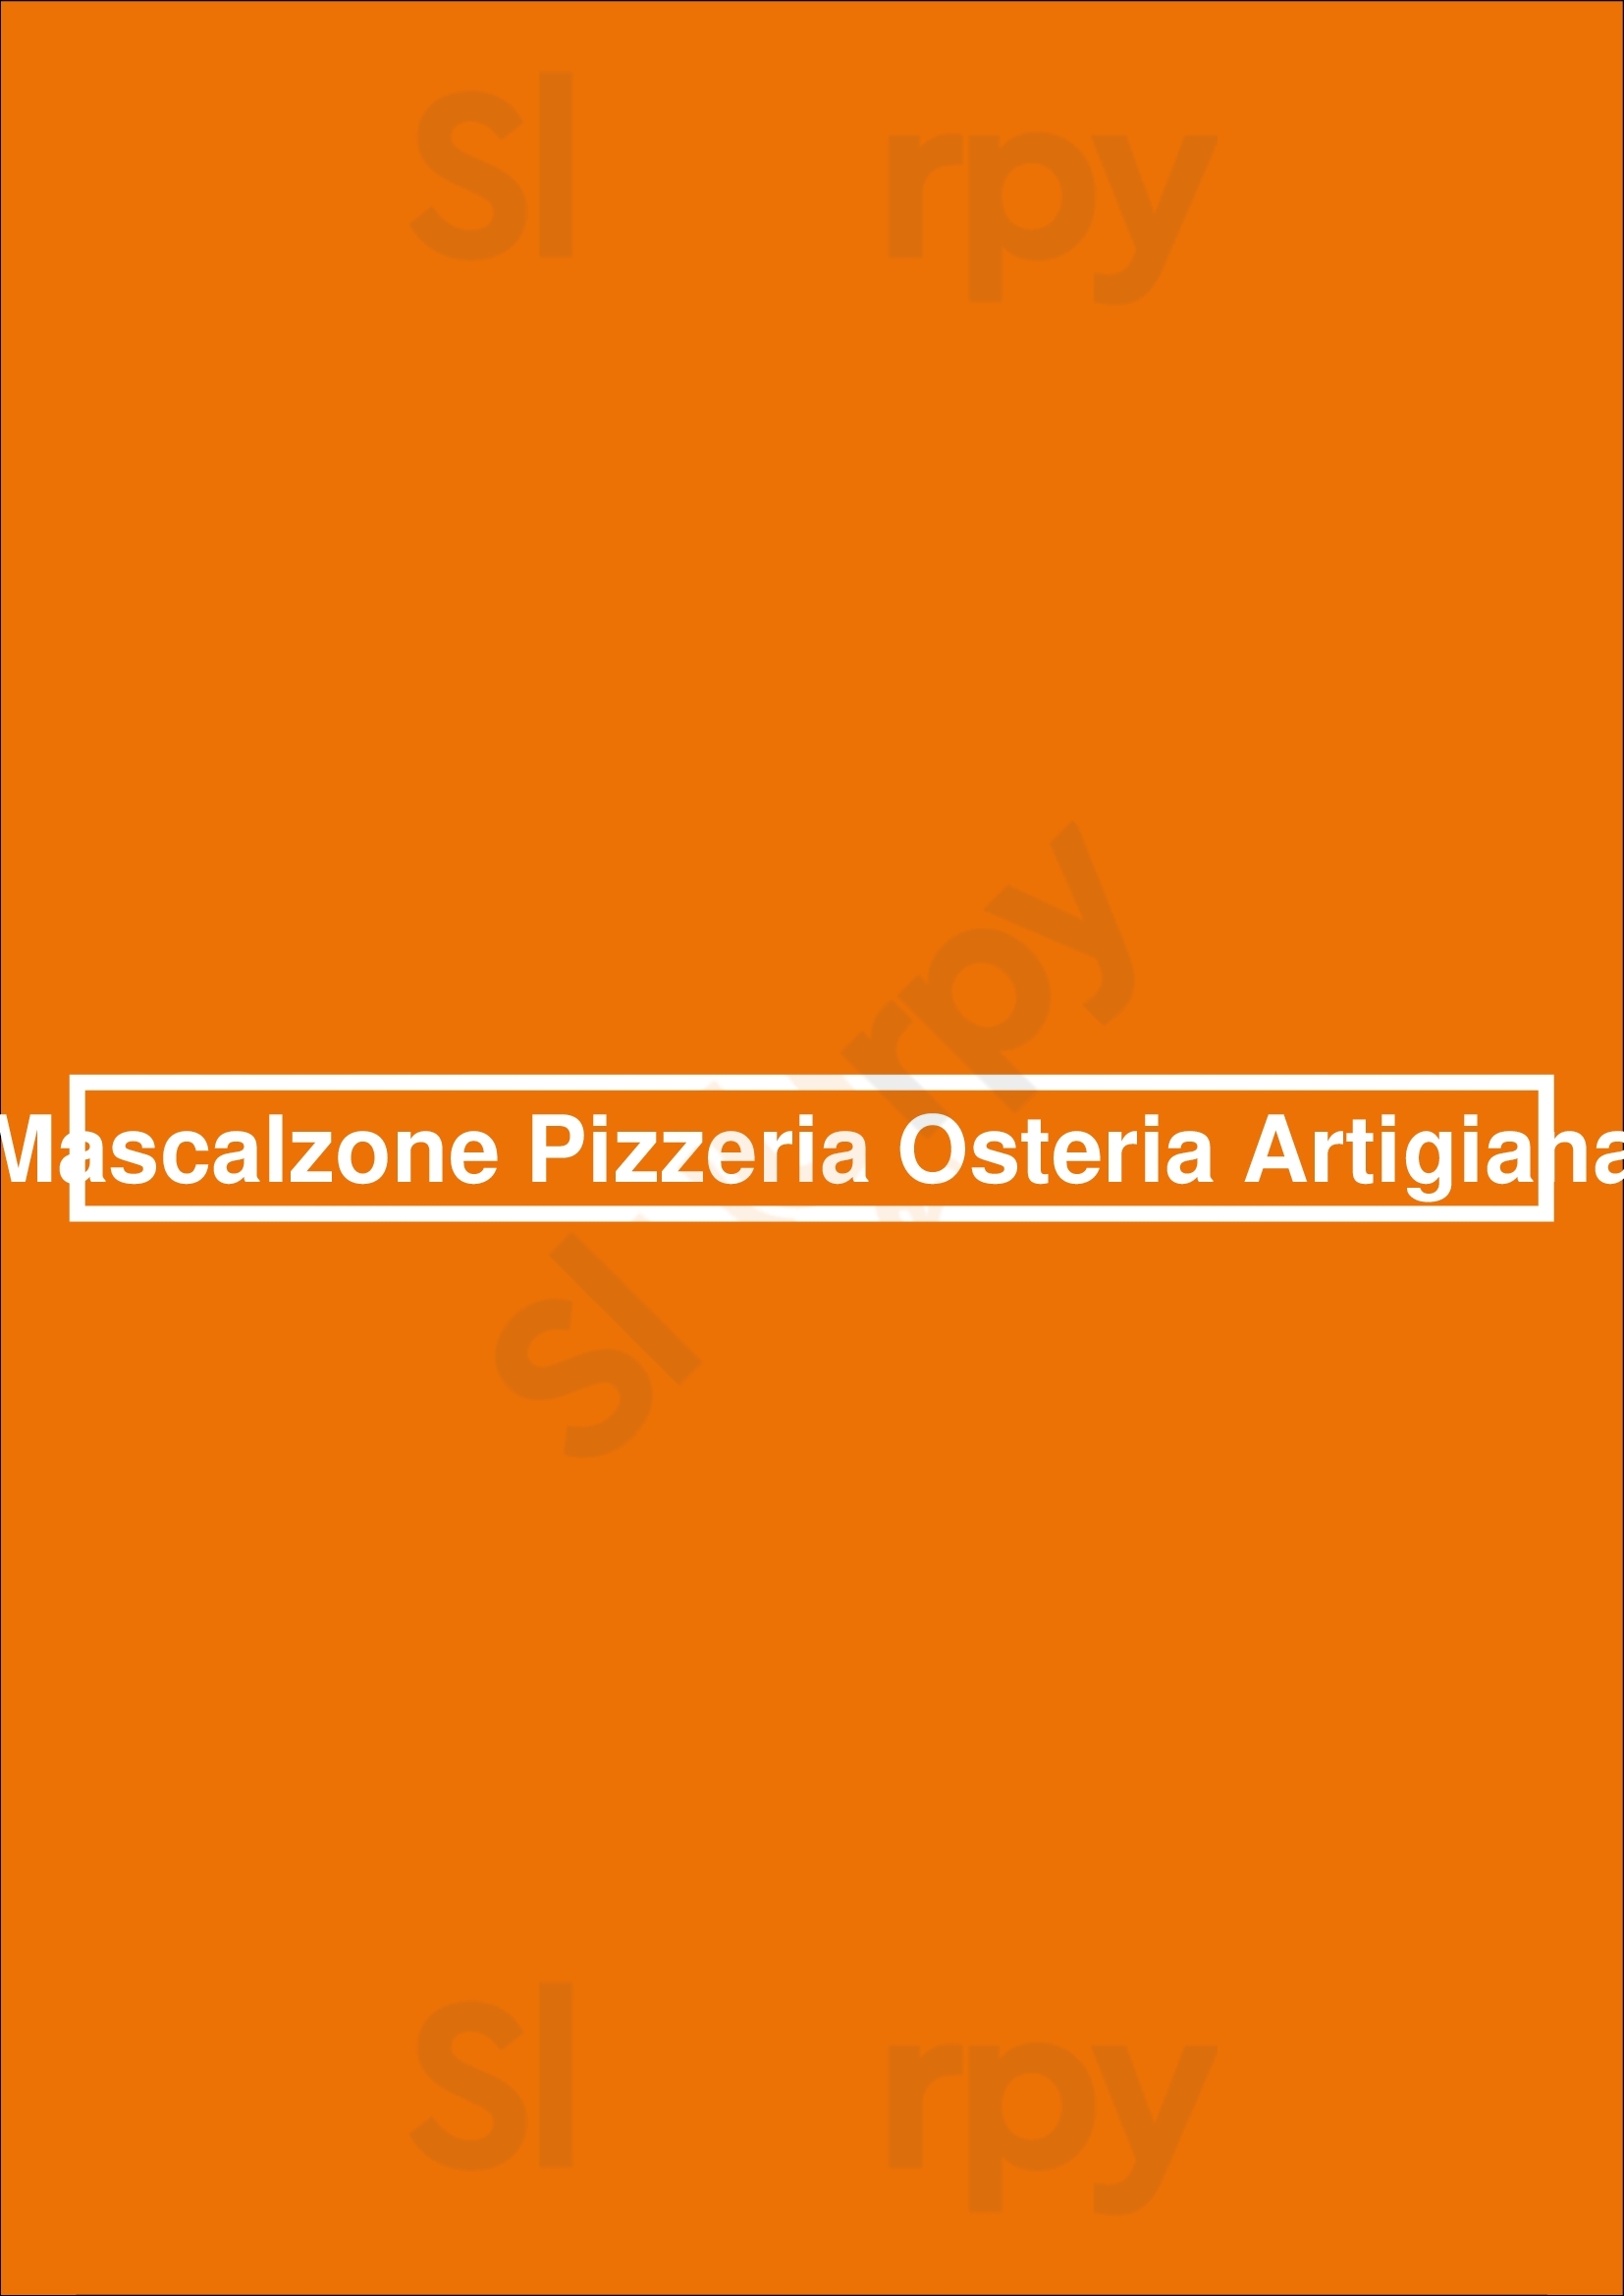 Mascalzone Pizzeria Osteria Artigiana Williamstown Menu - 1